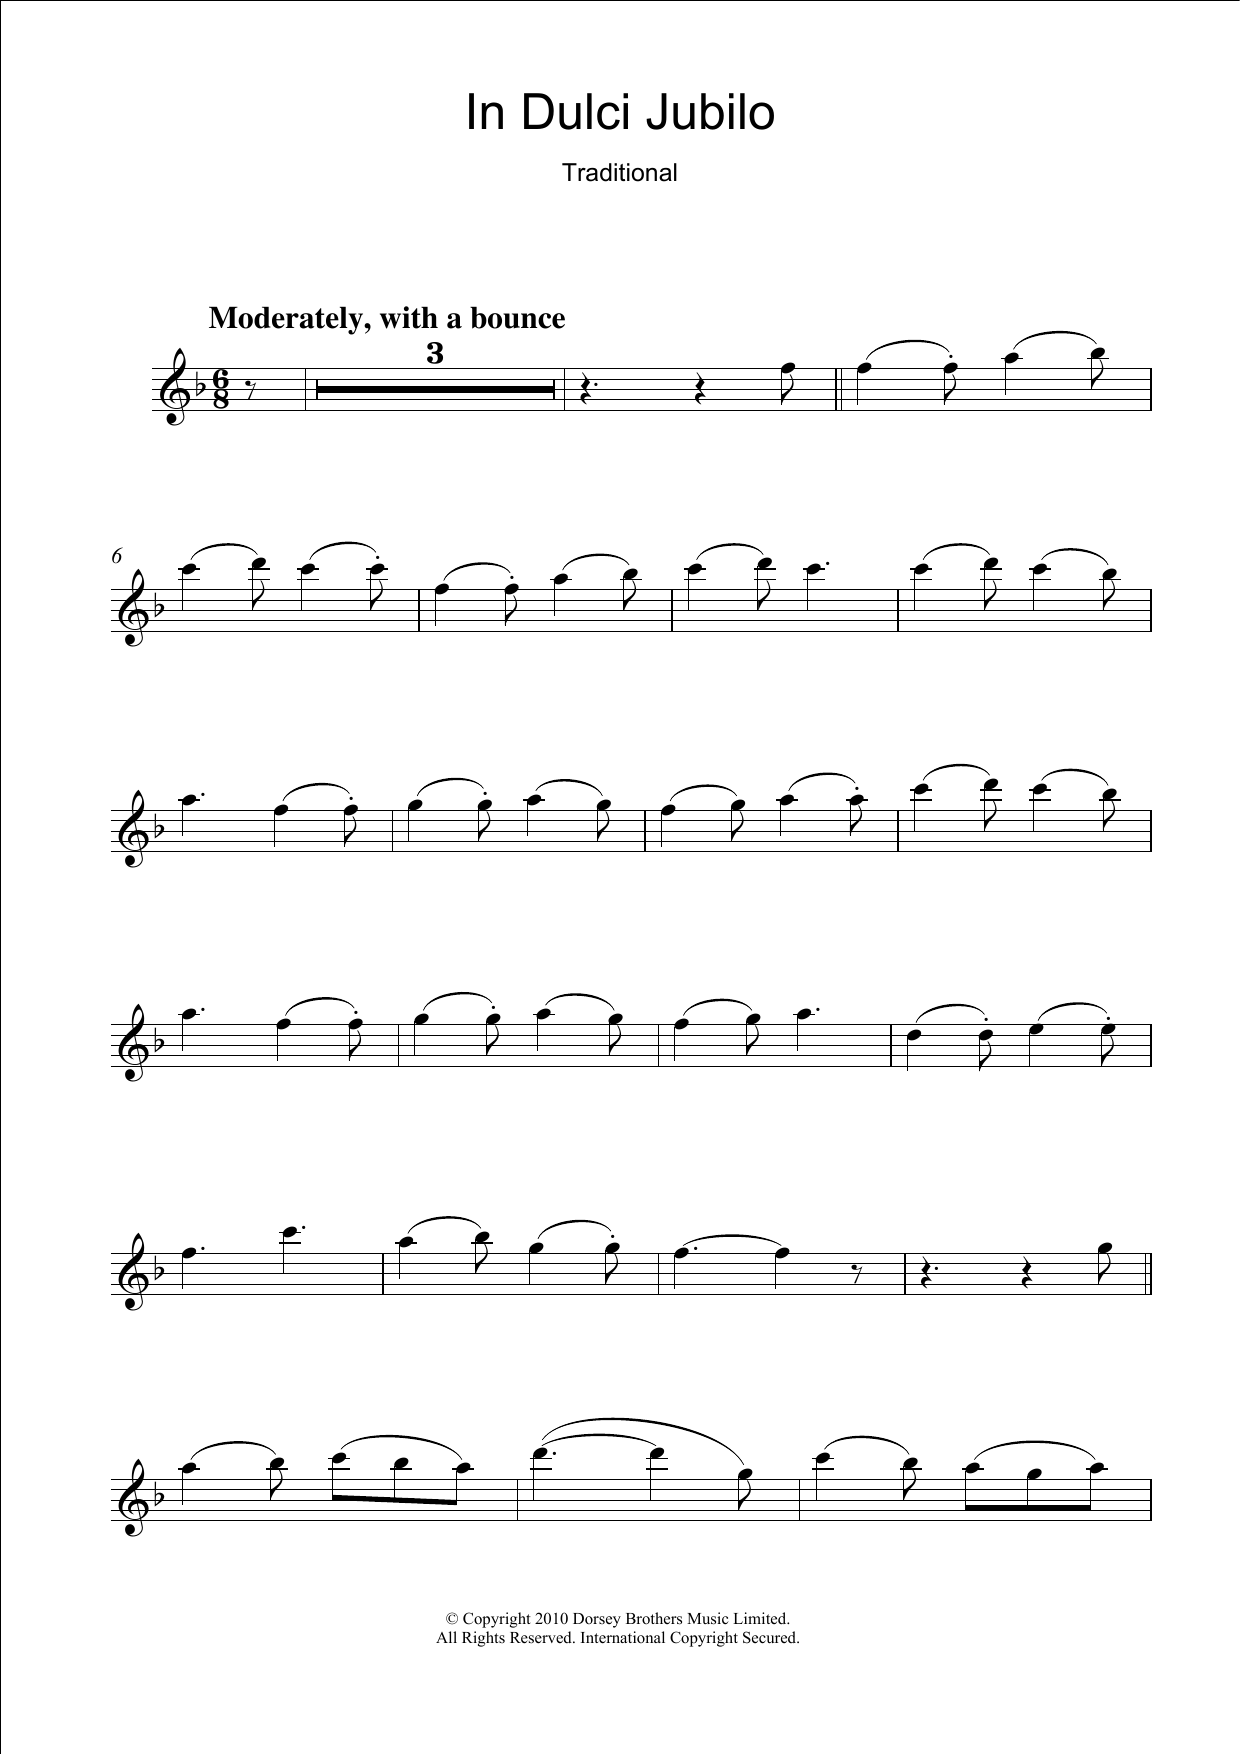 Traditional Carol In Dulci Jubilo Sheet Music Notes & Chords for Violin - Download or Print PDF